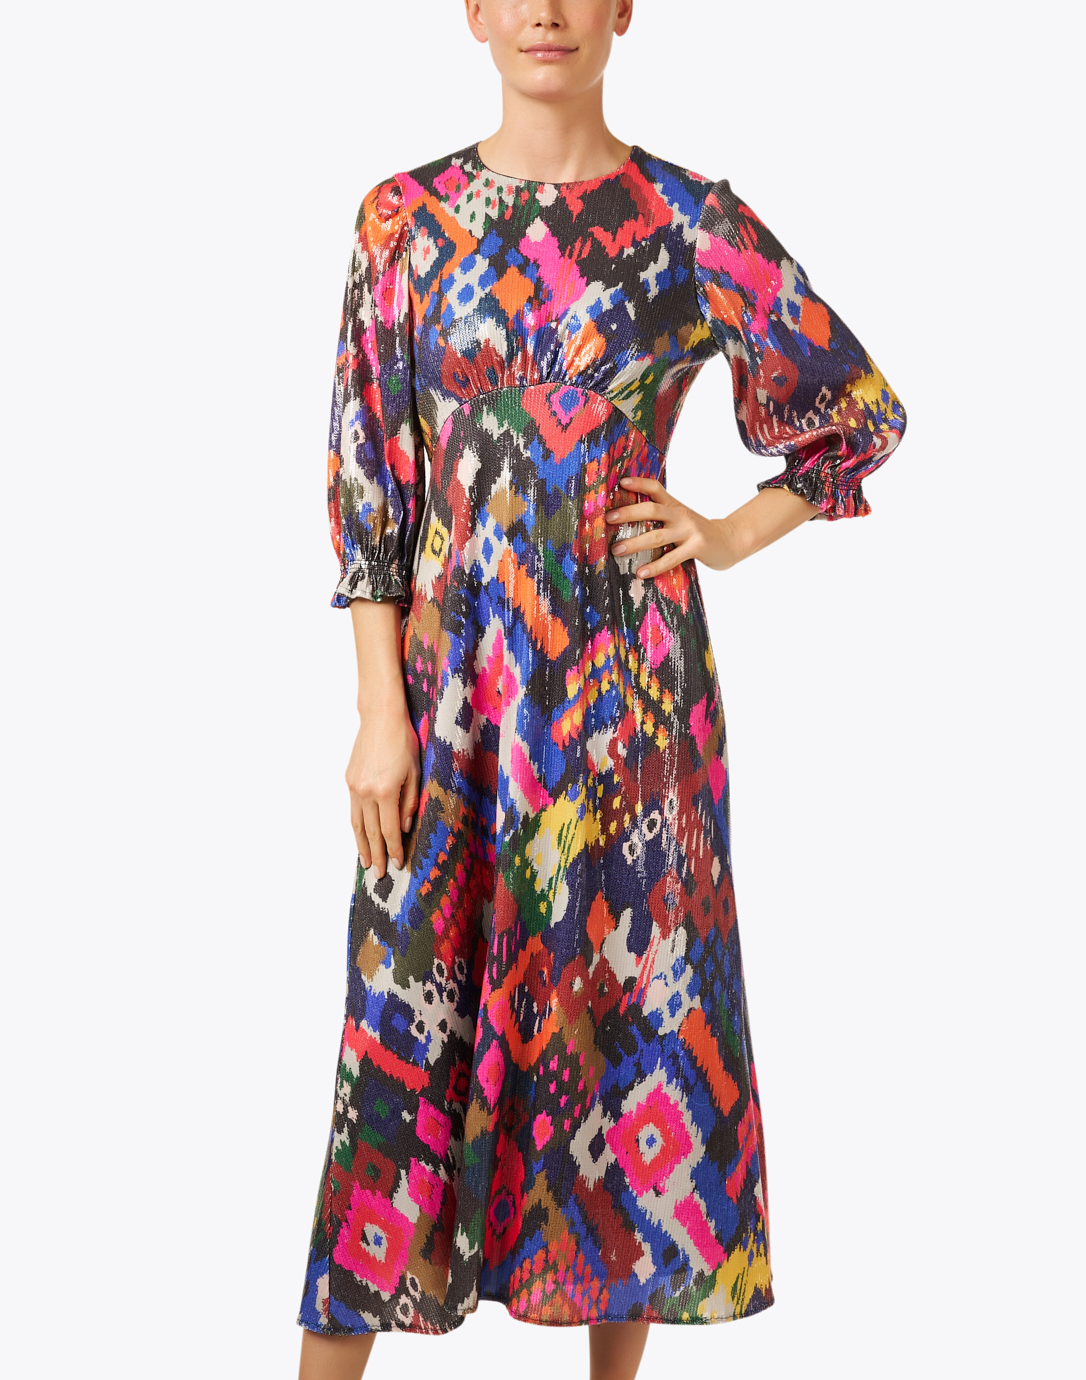 Kara Multi Ikat Sequin Print Dress | Vilagallo